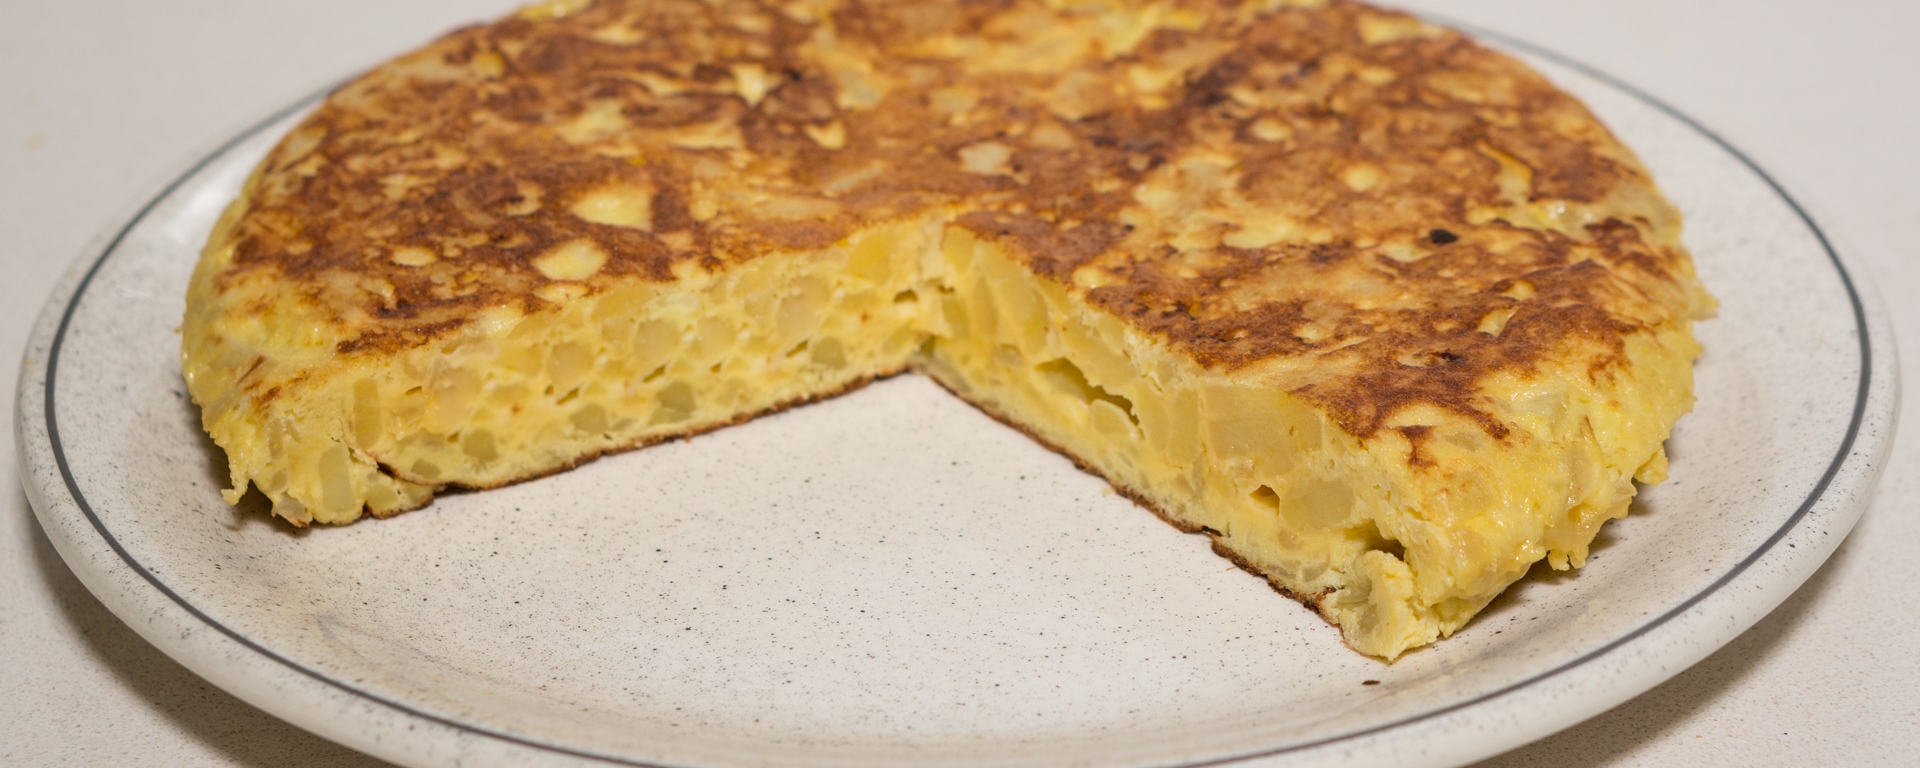 Vegan Tortilla Espanola - Spanish Potato Omelette Recipe